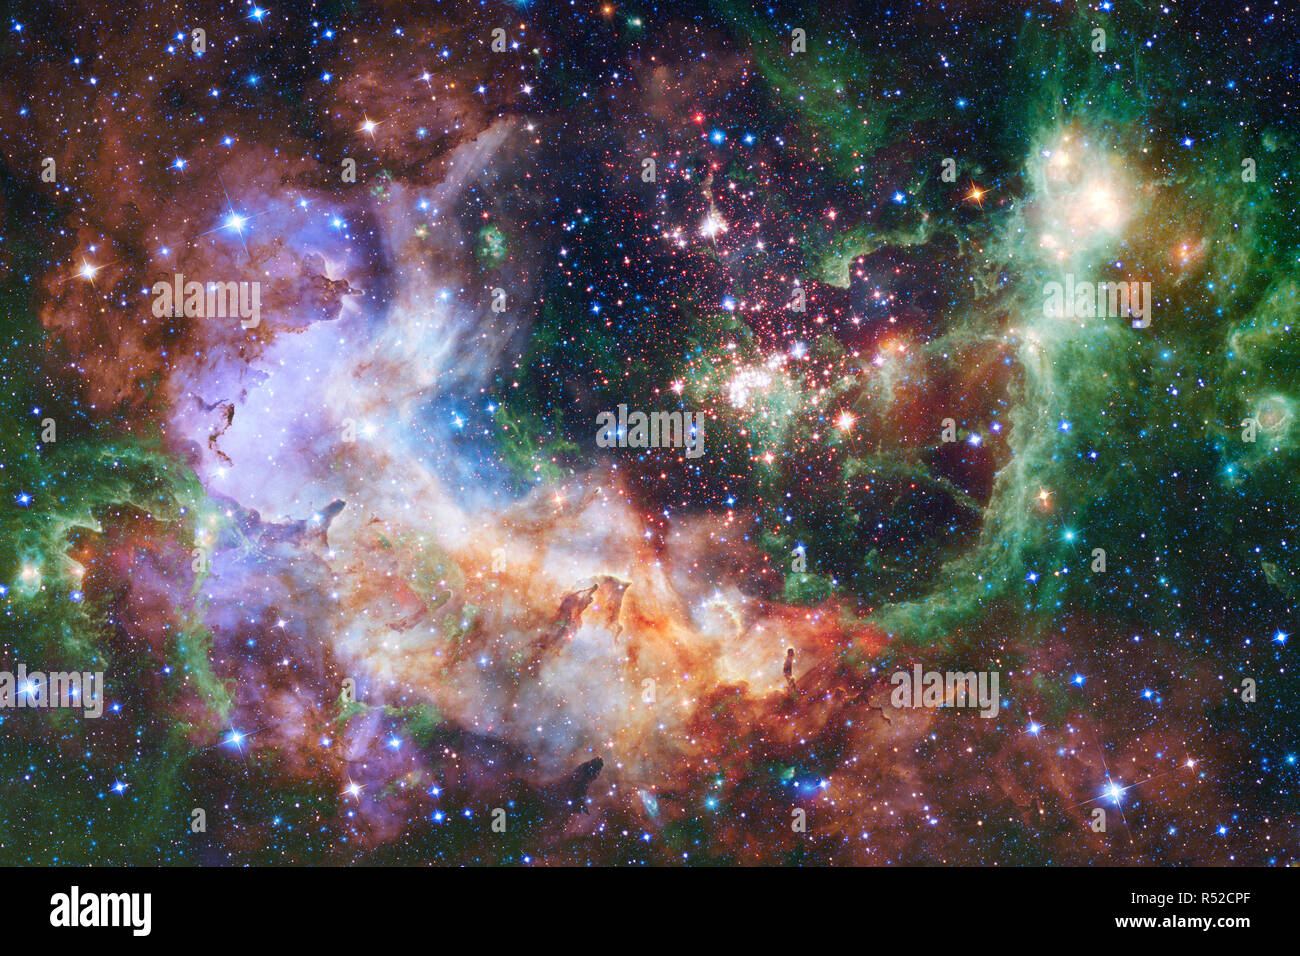 Hubble Telescope Wallpaper Desktop 59 images